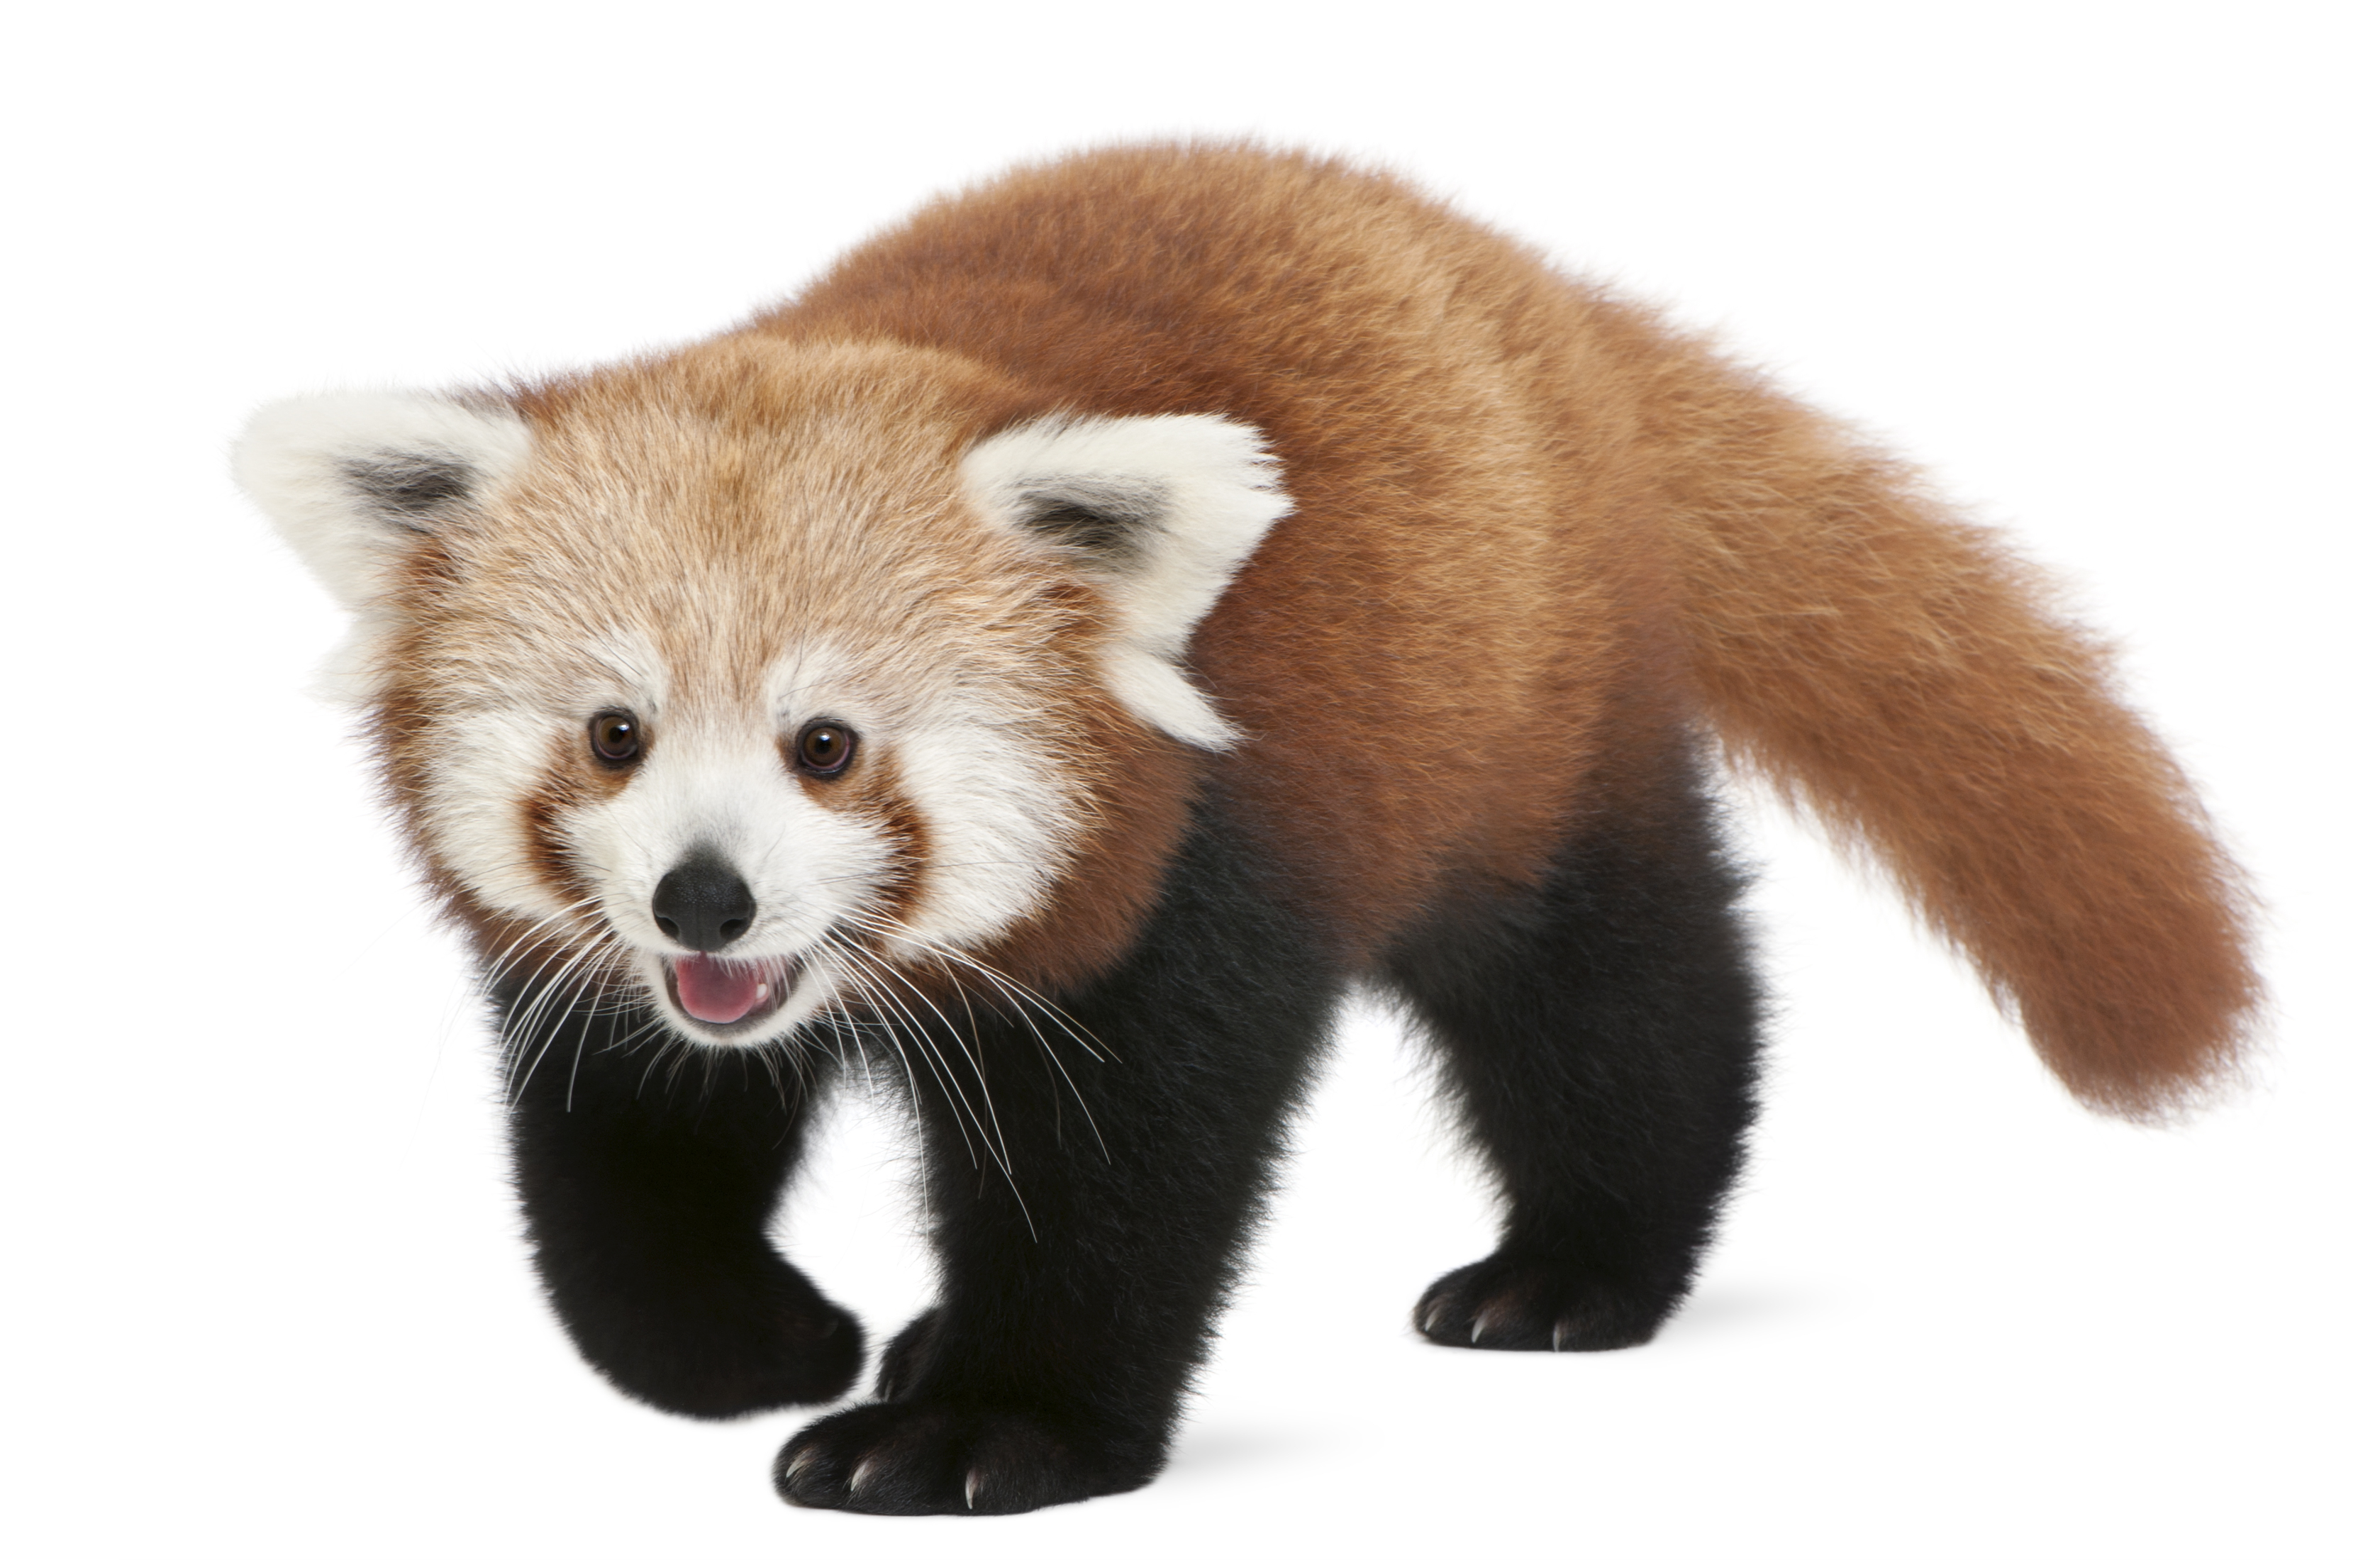 Red panda images